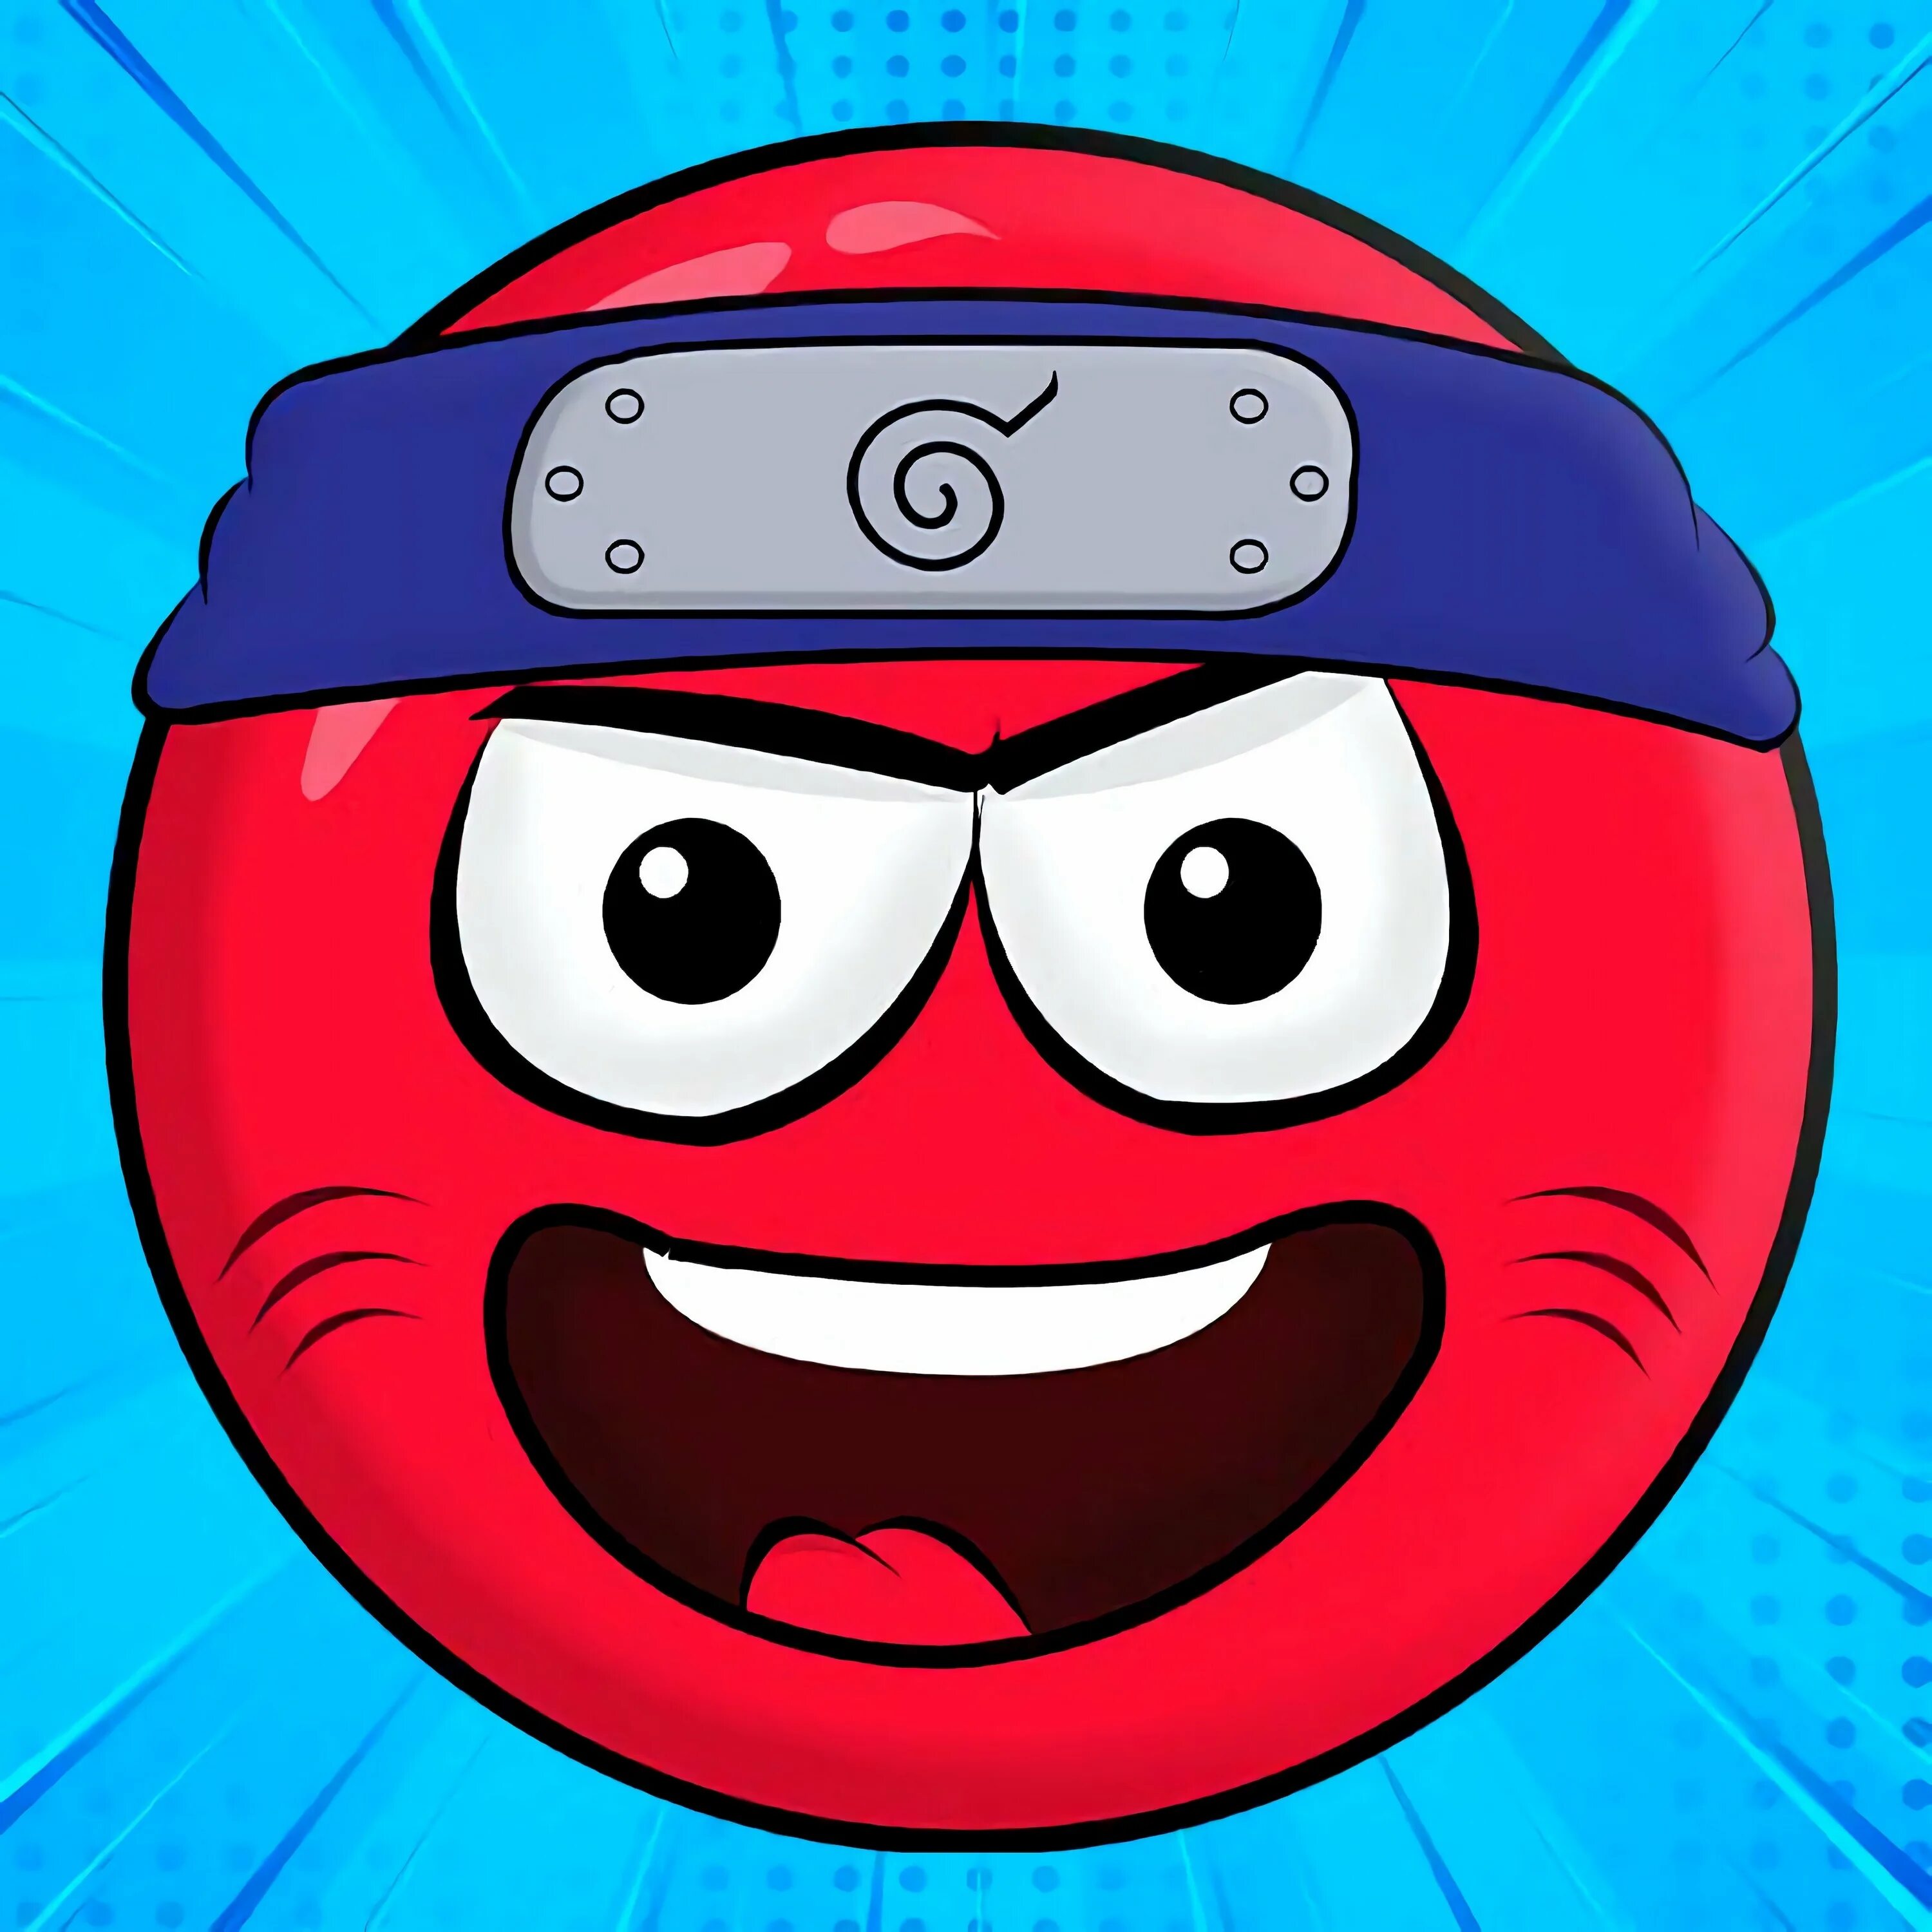 Игра Red Ball 4. Красный шар ред бол 4. Red Ball Adventure игра. Ball Hero Adventure: Red Bounce Ball.